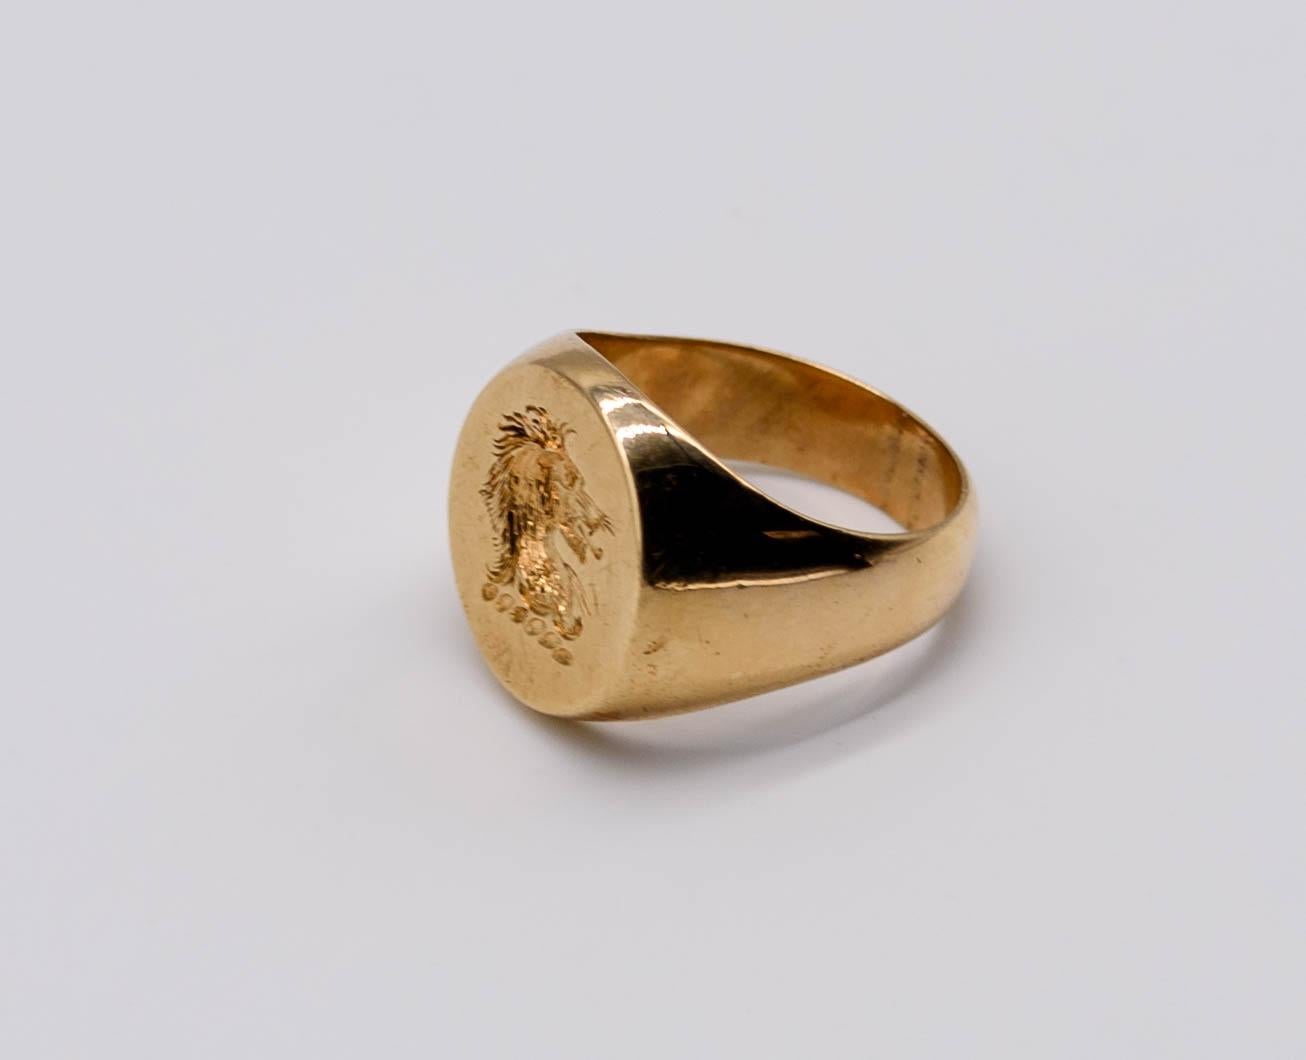 Aesthetic Movement Gentleman's Gold Intaglio Chimera Ring